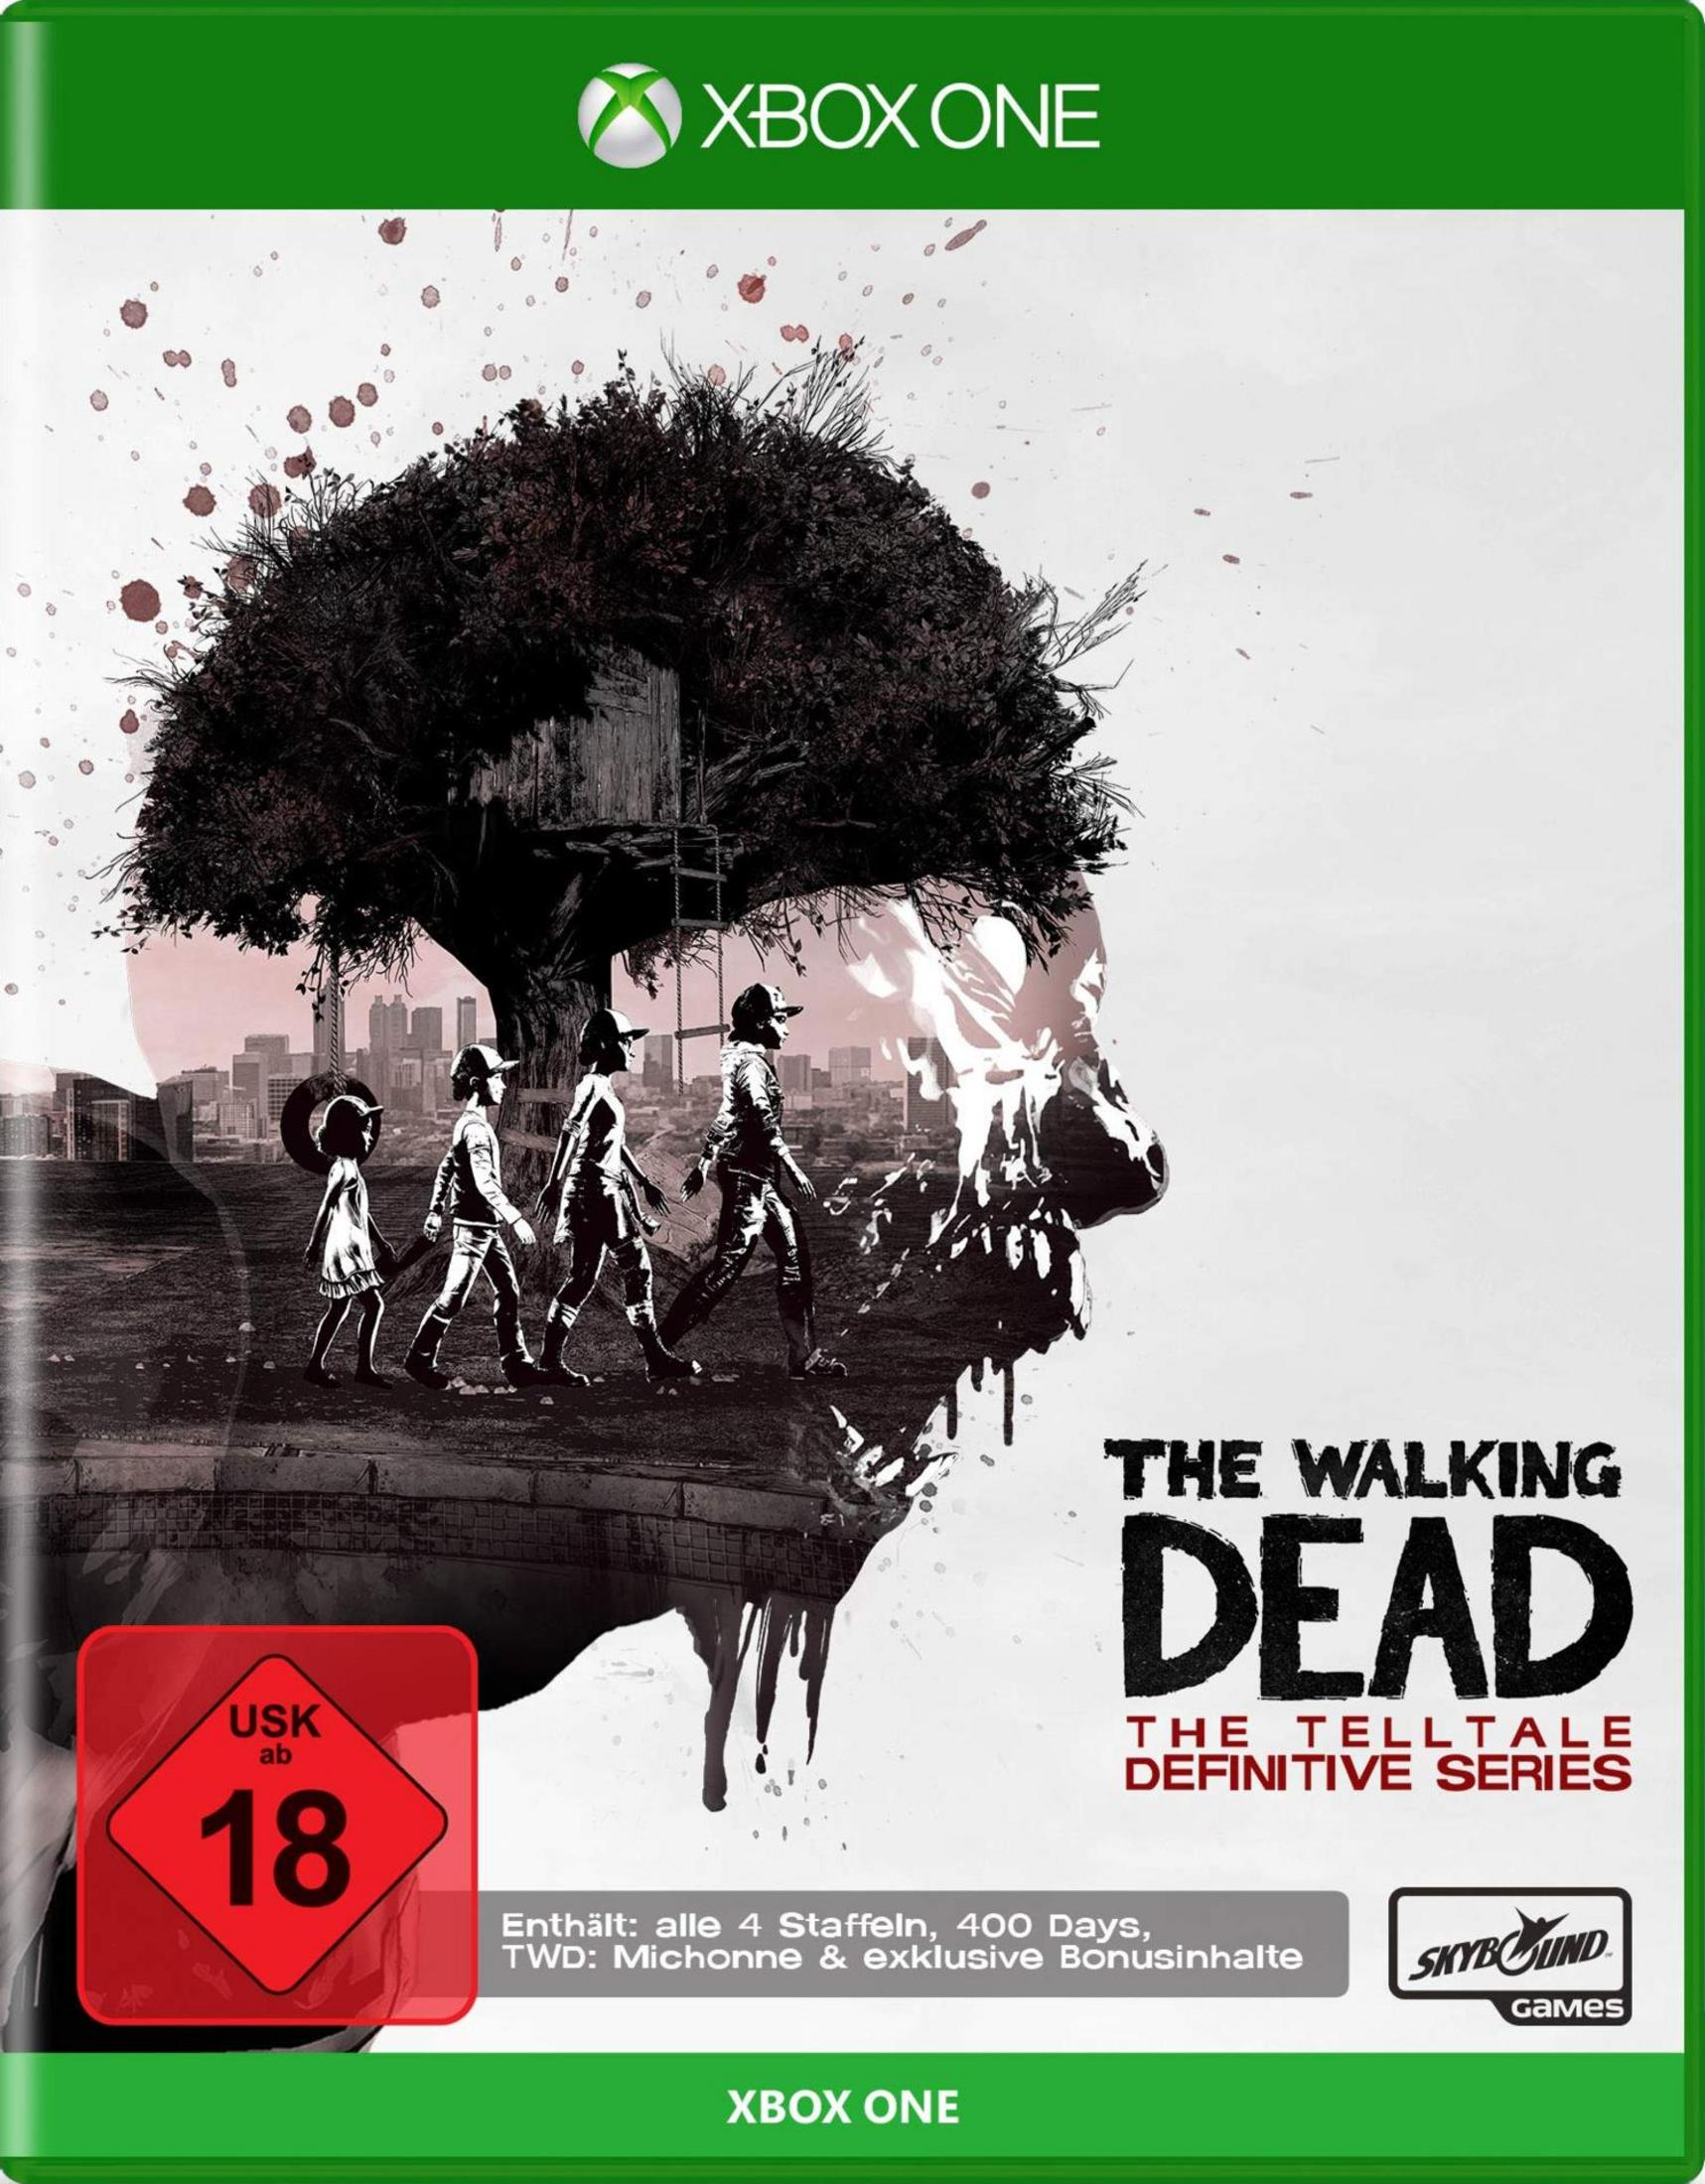 Walking Dead Series TellTale One] [Xbox XB-One - Defintive